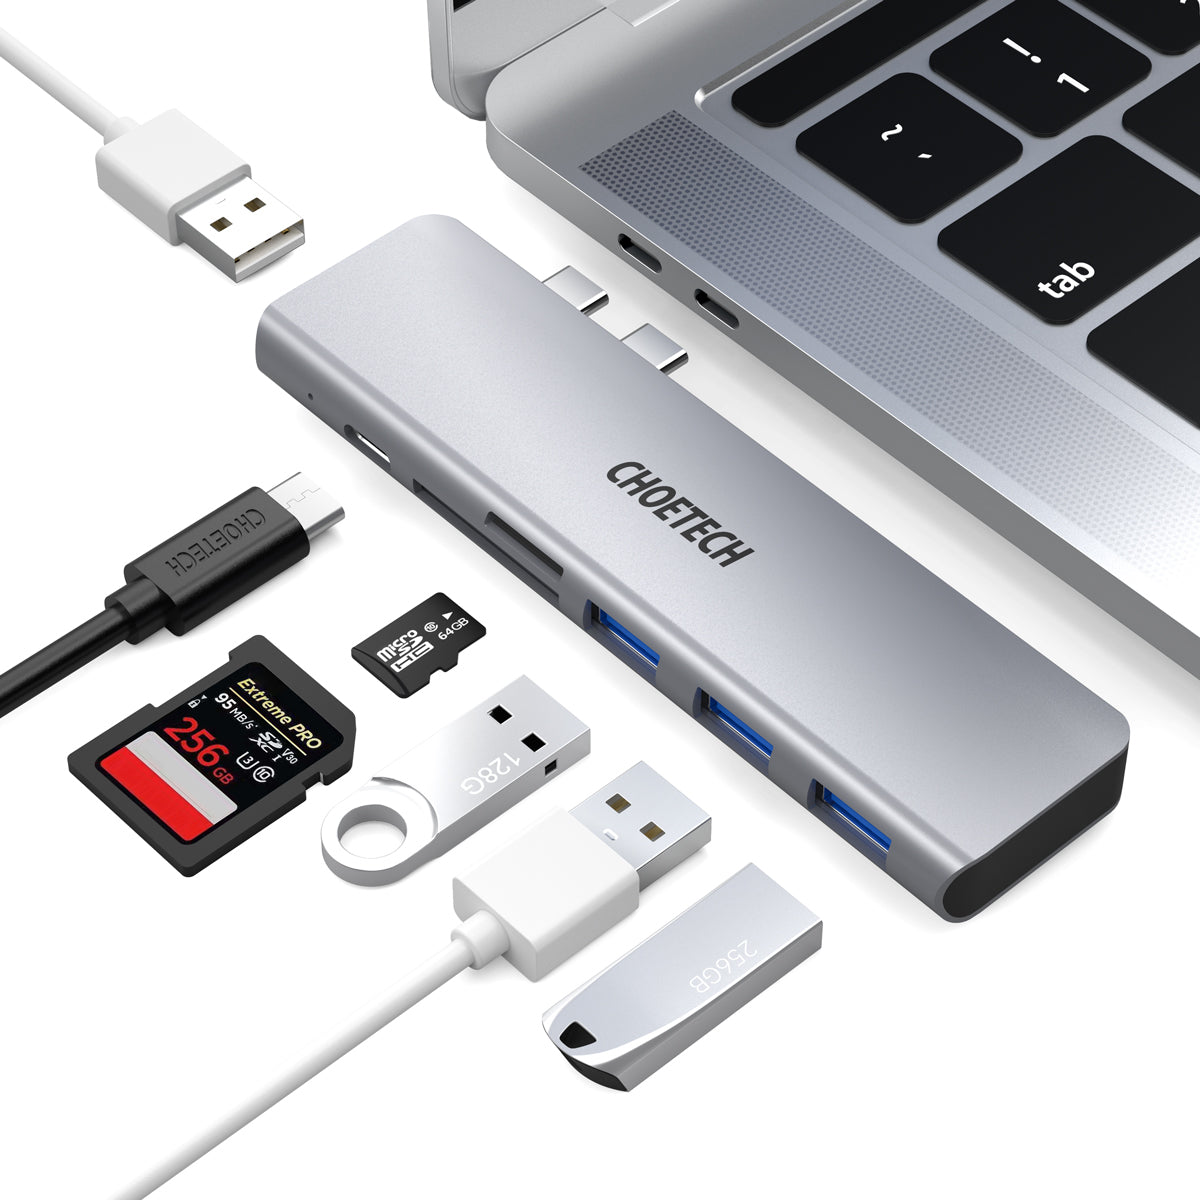 HUB-M23 MacBook Pro USB Adapter, CHOETECH 7 in 1 MacBook Air Adapter für MacBook Pro/Air 13-16”2016-2020, MacBook Zubehör mit Thunderbolt 3 100W PD Port, 3 USB 3.0 Ports, USB 2.0 Port, TF/SD Karte Leser